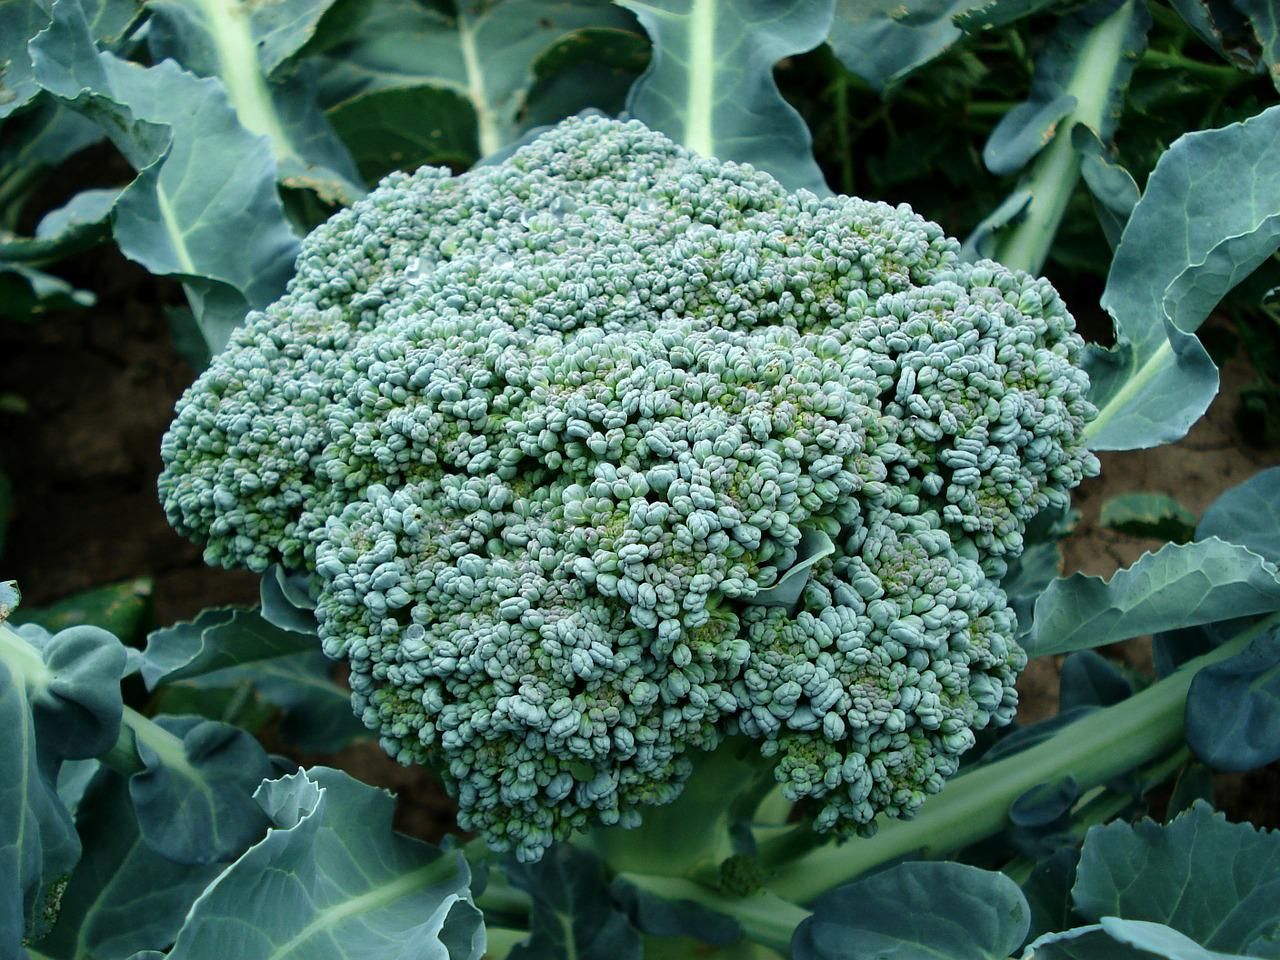 Main broccoli head ready for harvesting